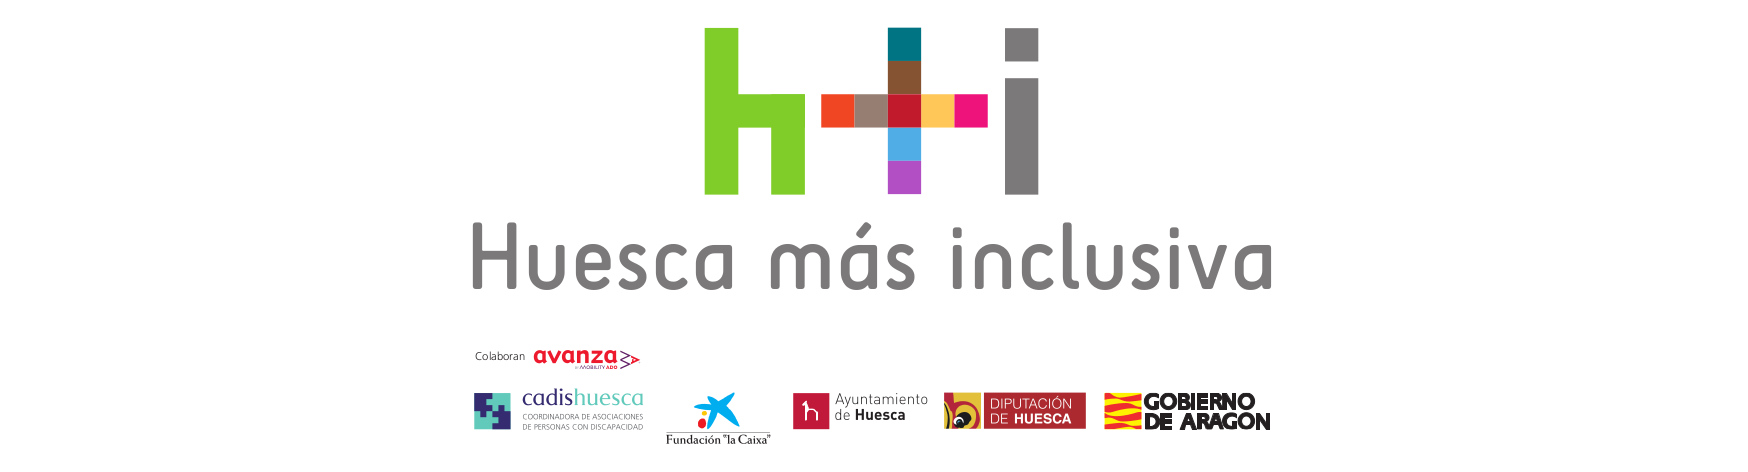 banner web HUESCA MAS INCLUSIVA COLOR Baja 4